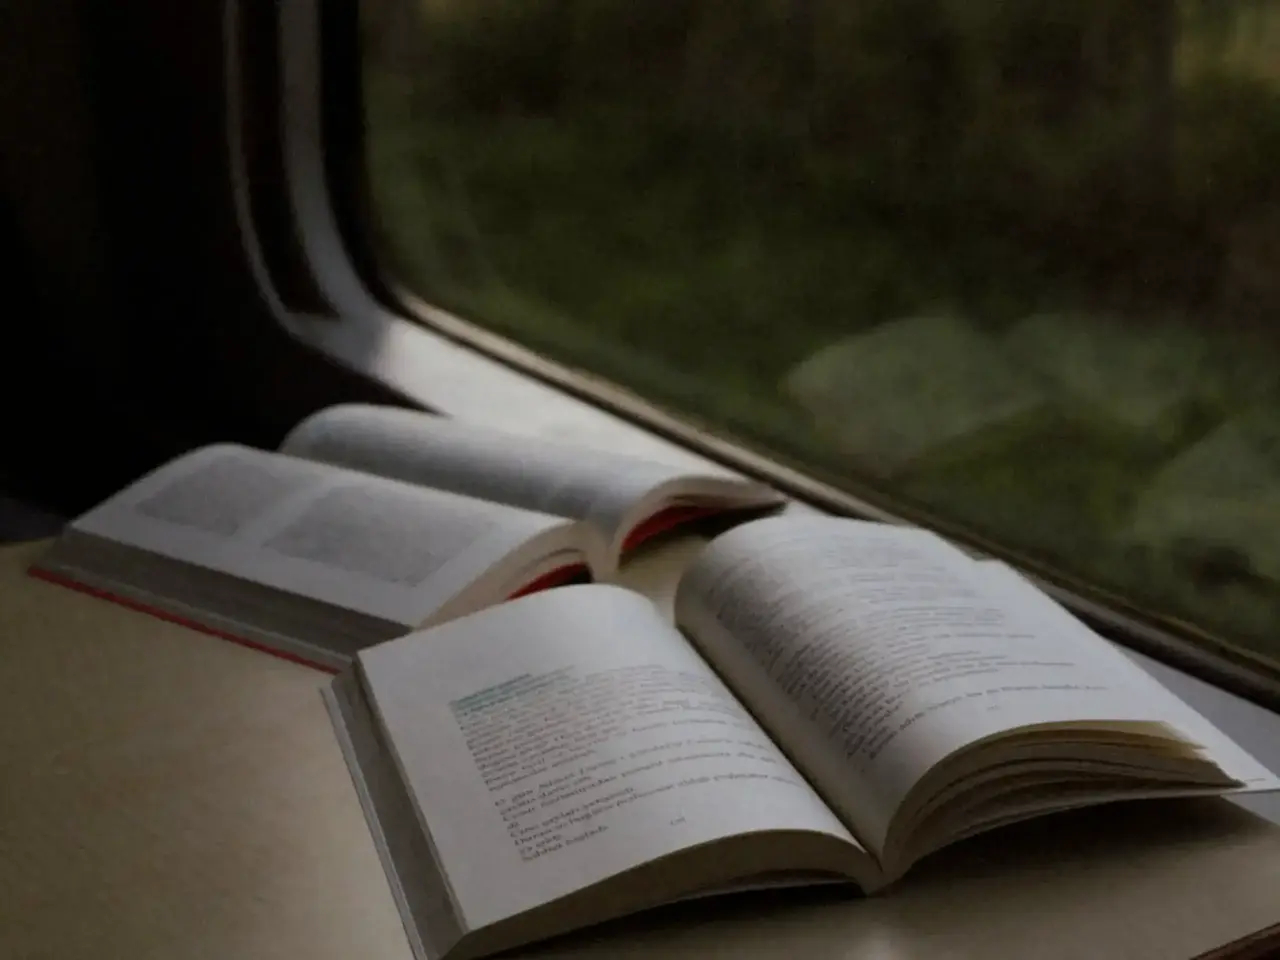 Two books in a dark train